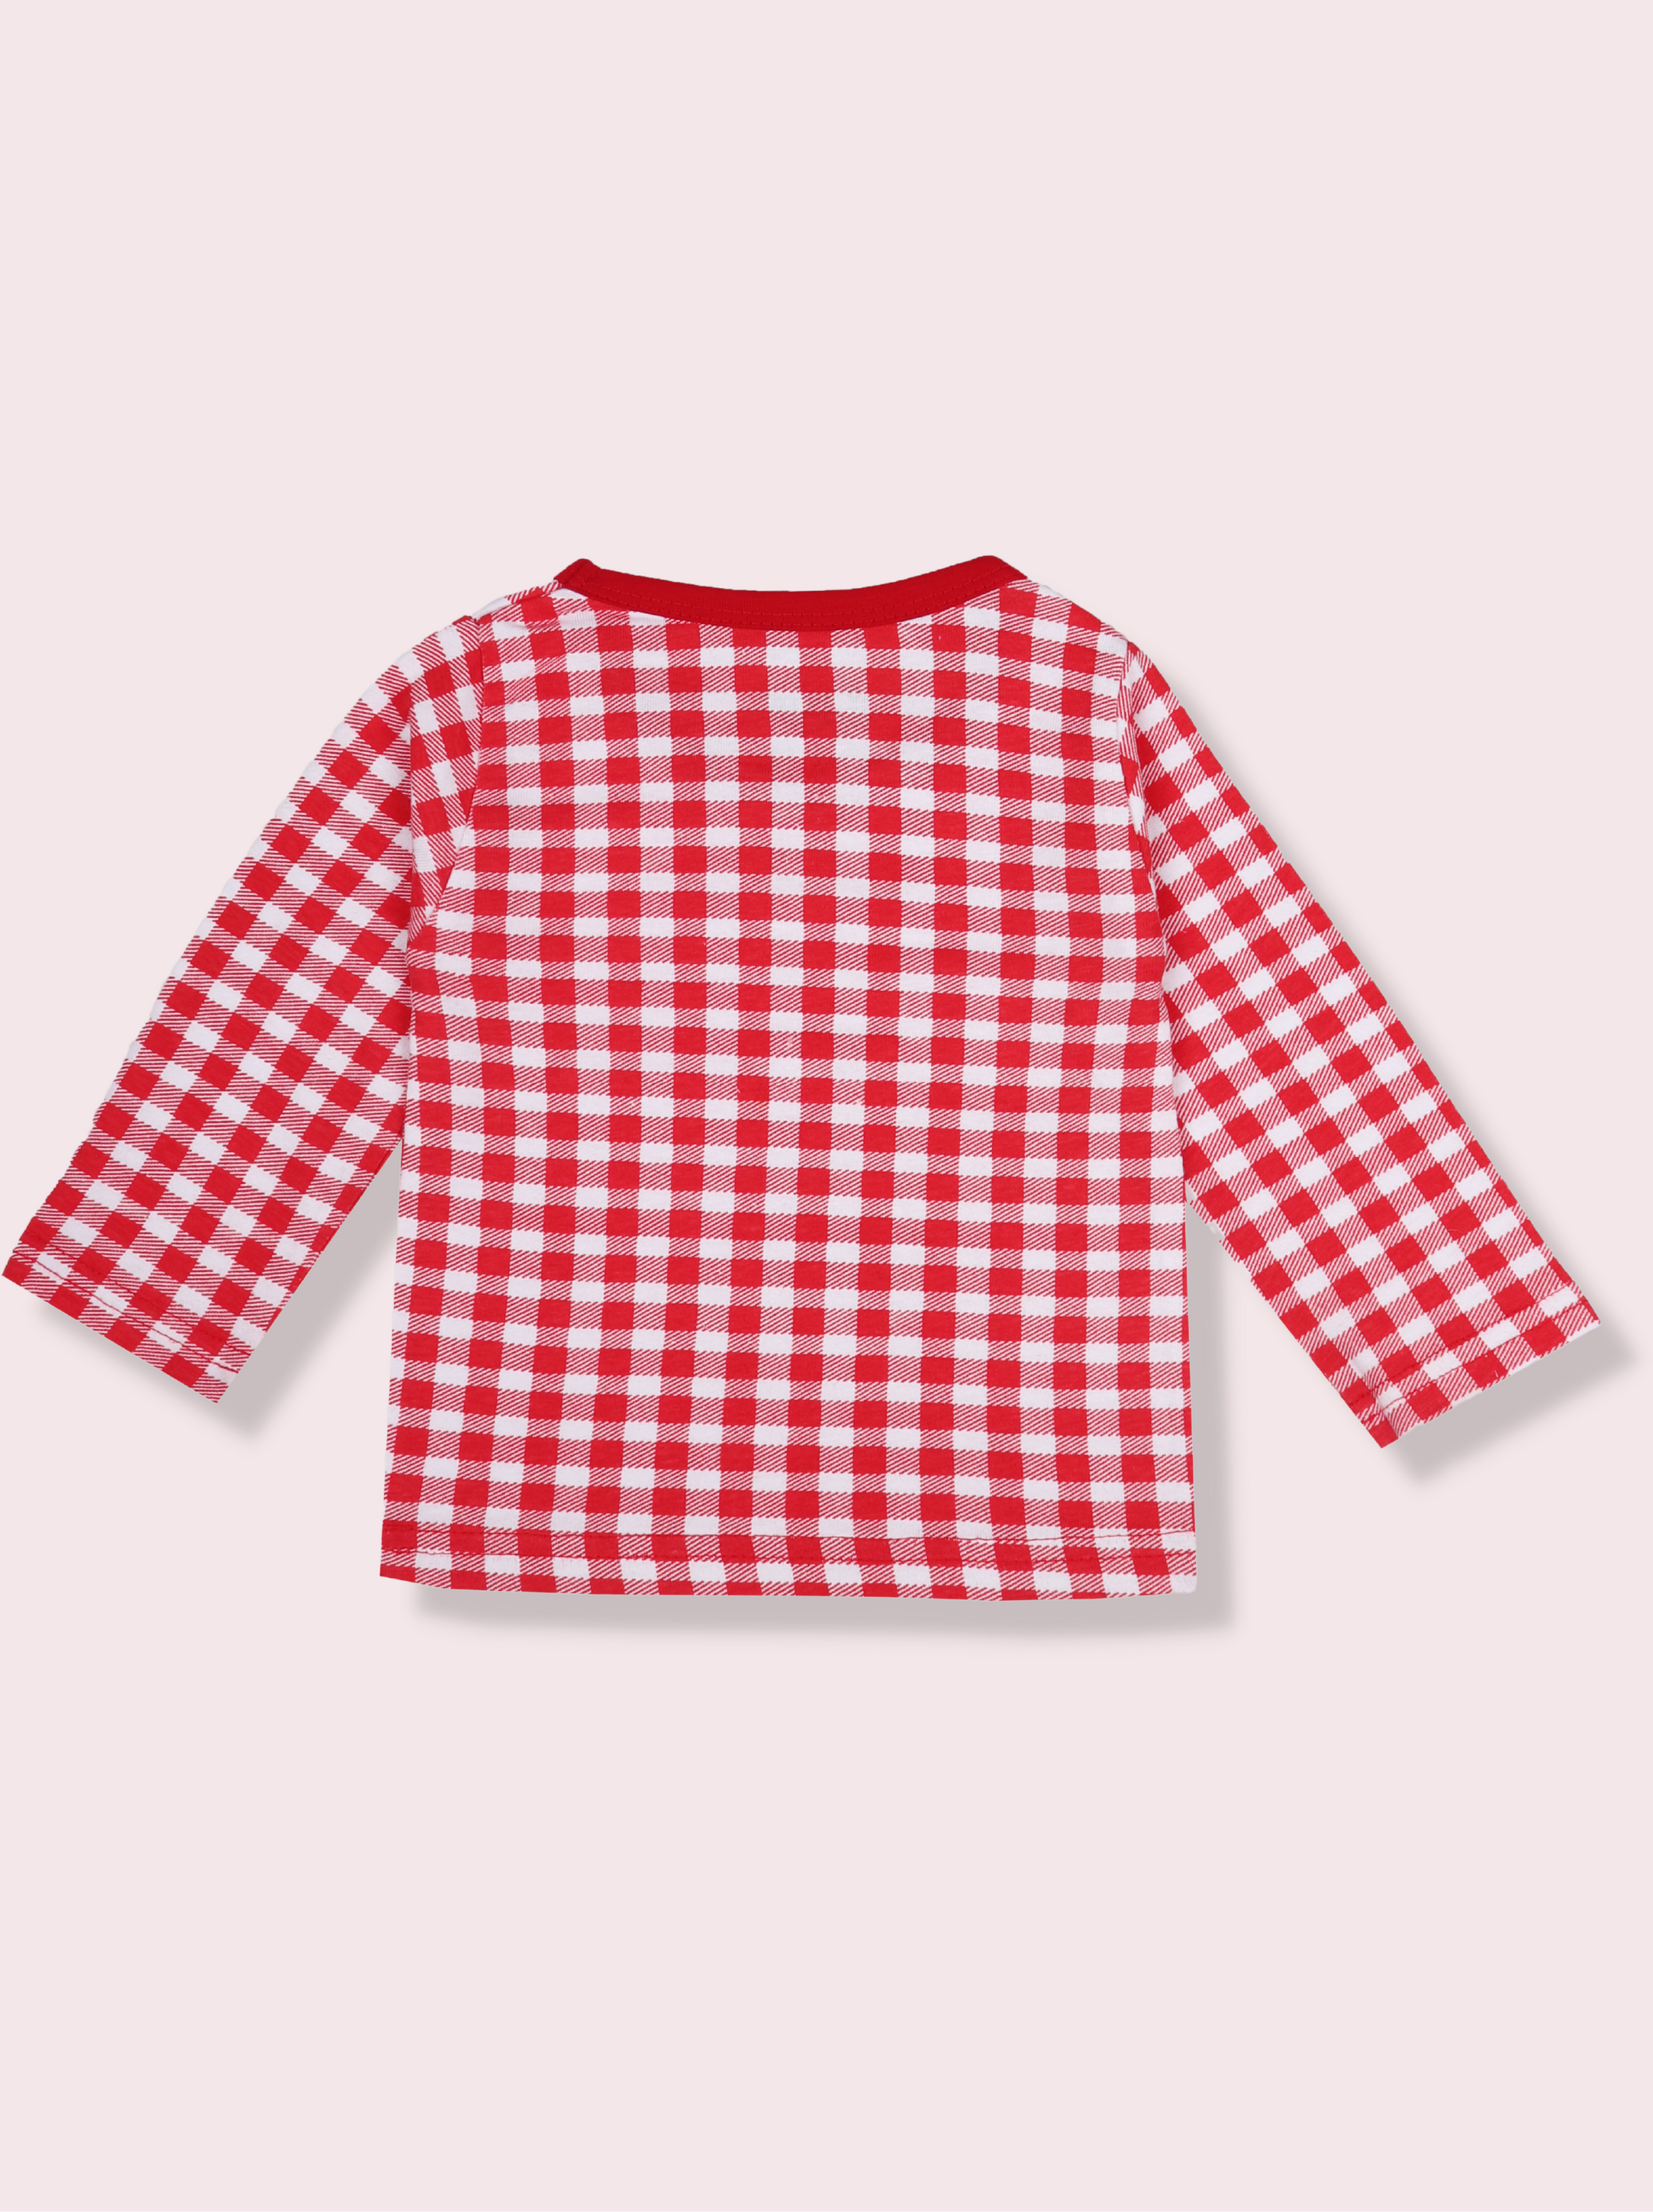 Kids Girls Full sleeve Checkered Shorts set